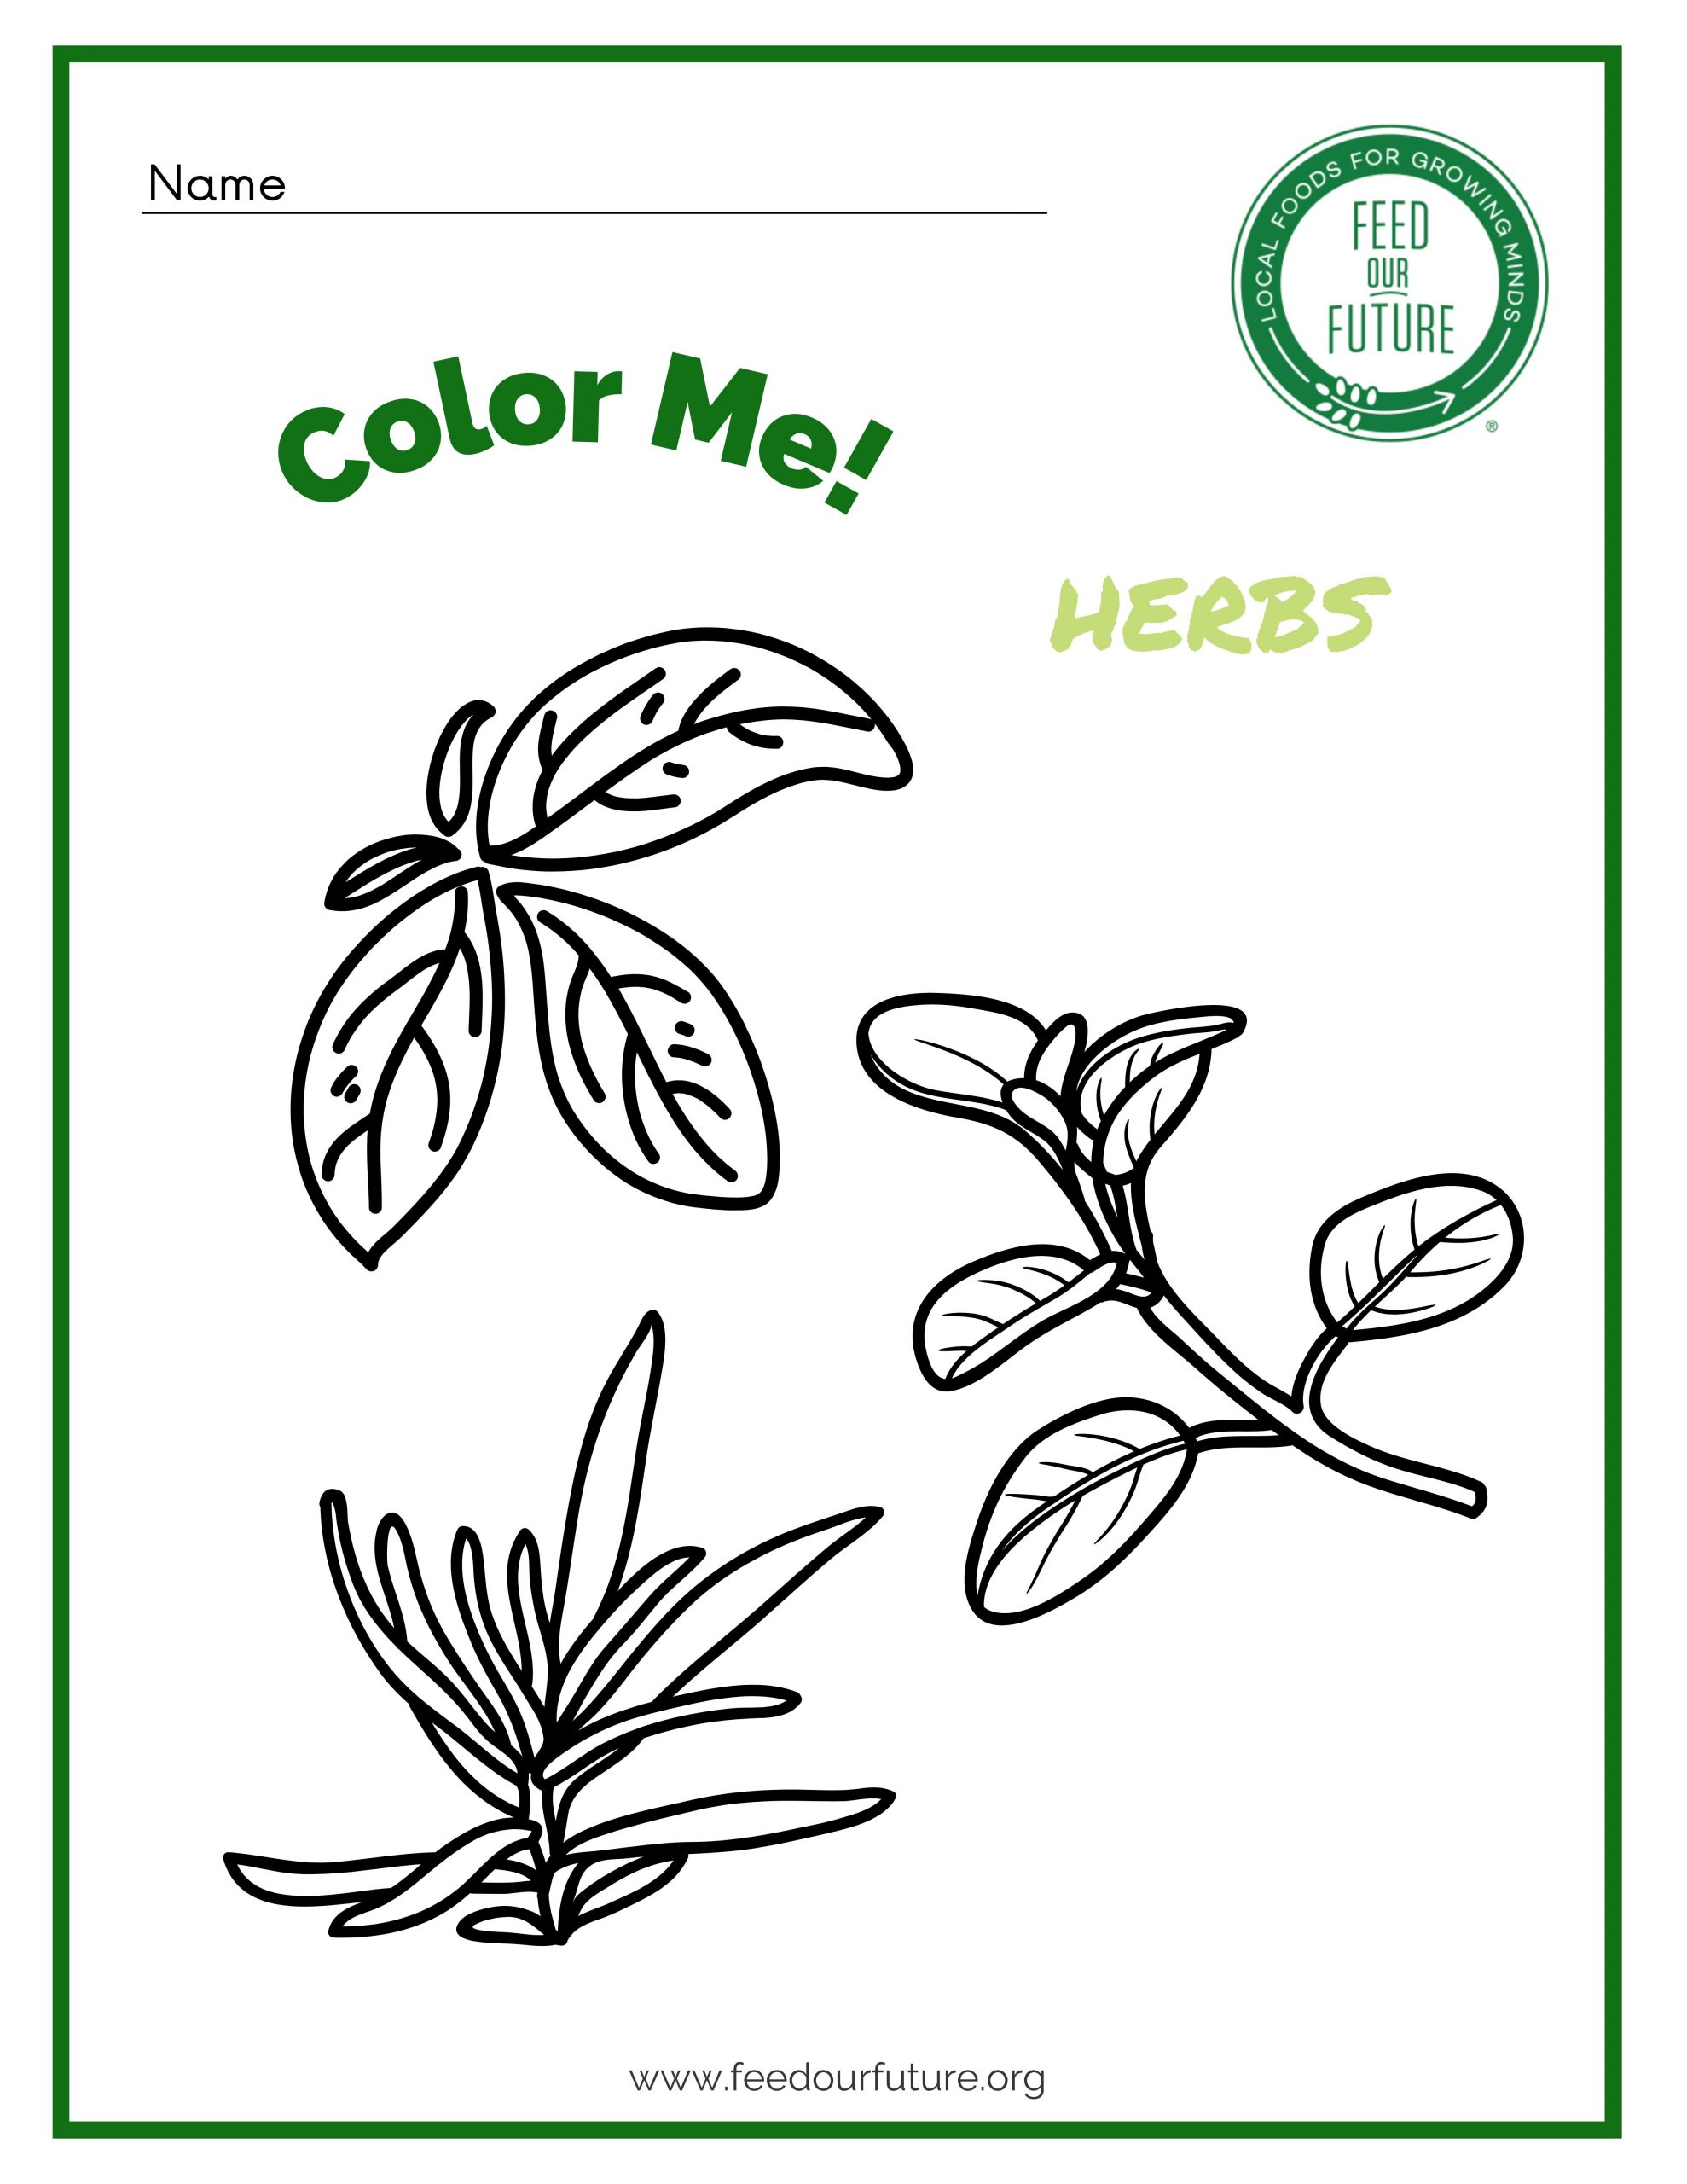 Herbs Coloring Sheet